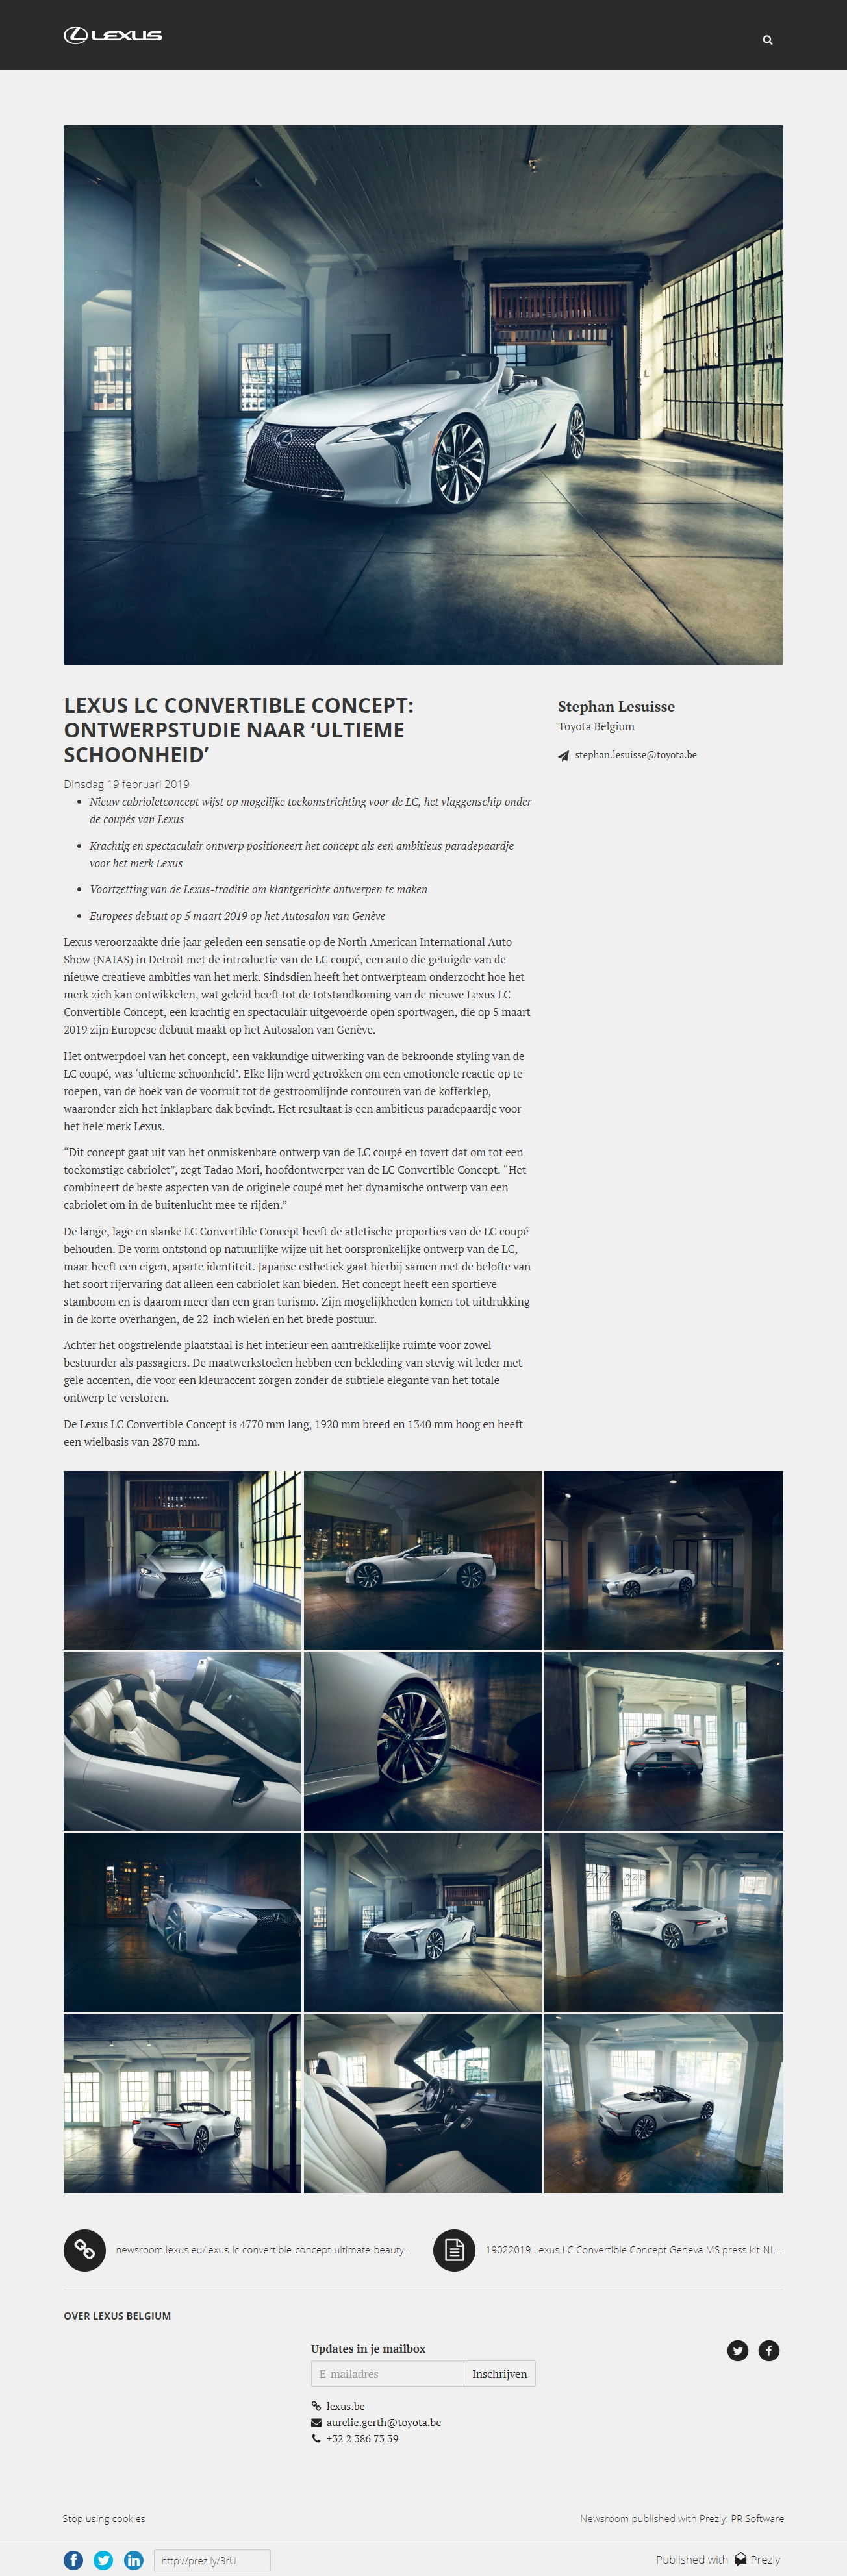 Concept Car Press Release Example